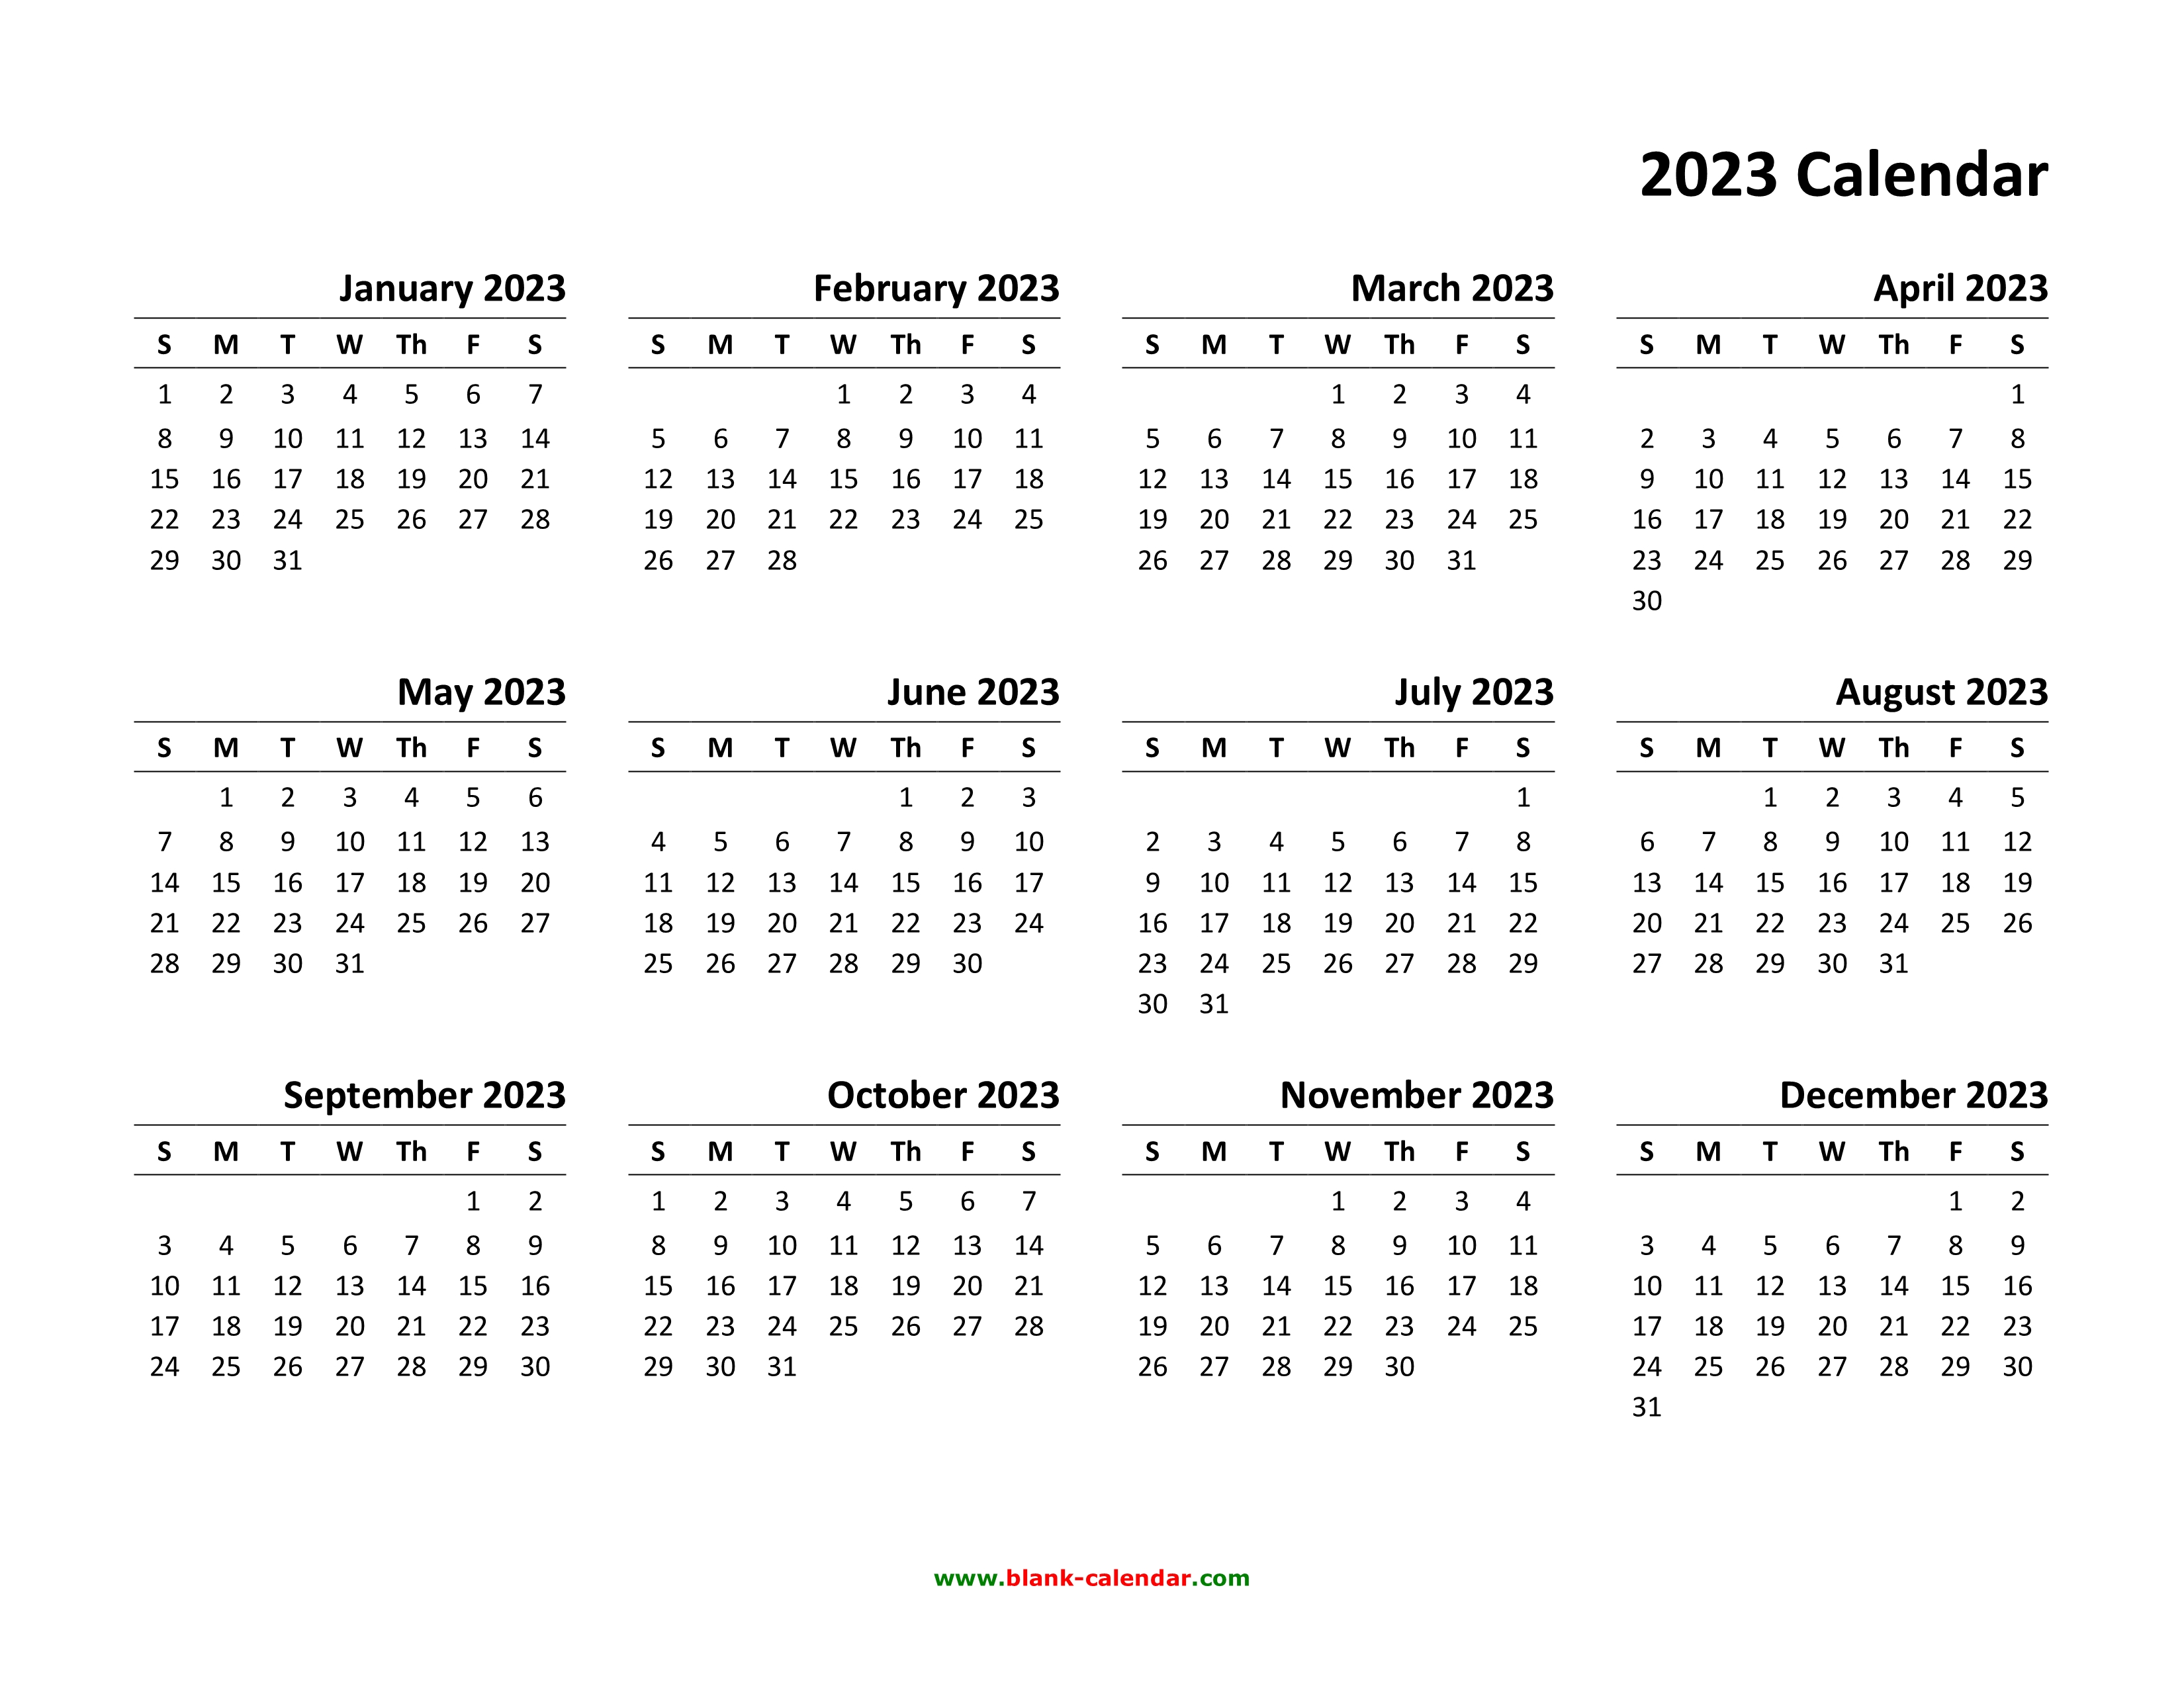 free-printable-yearly-calendar-2023-shopmall-my